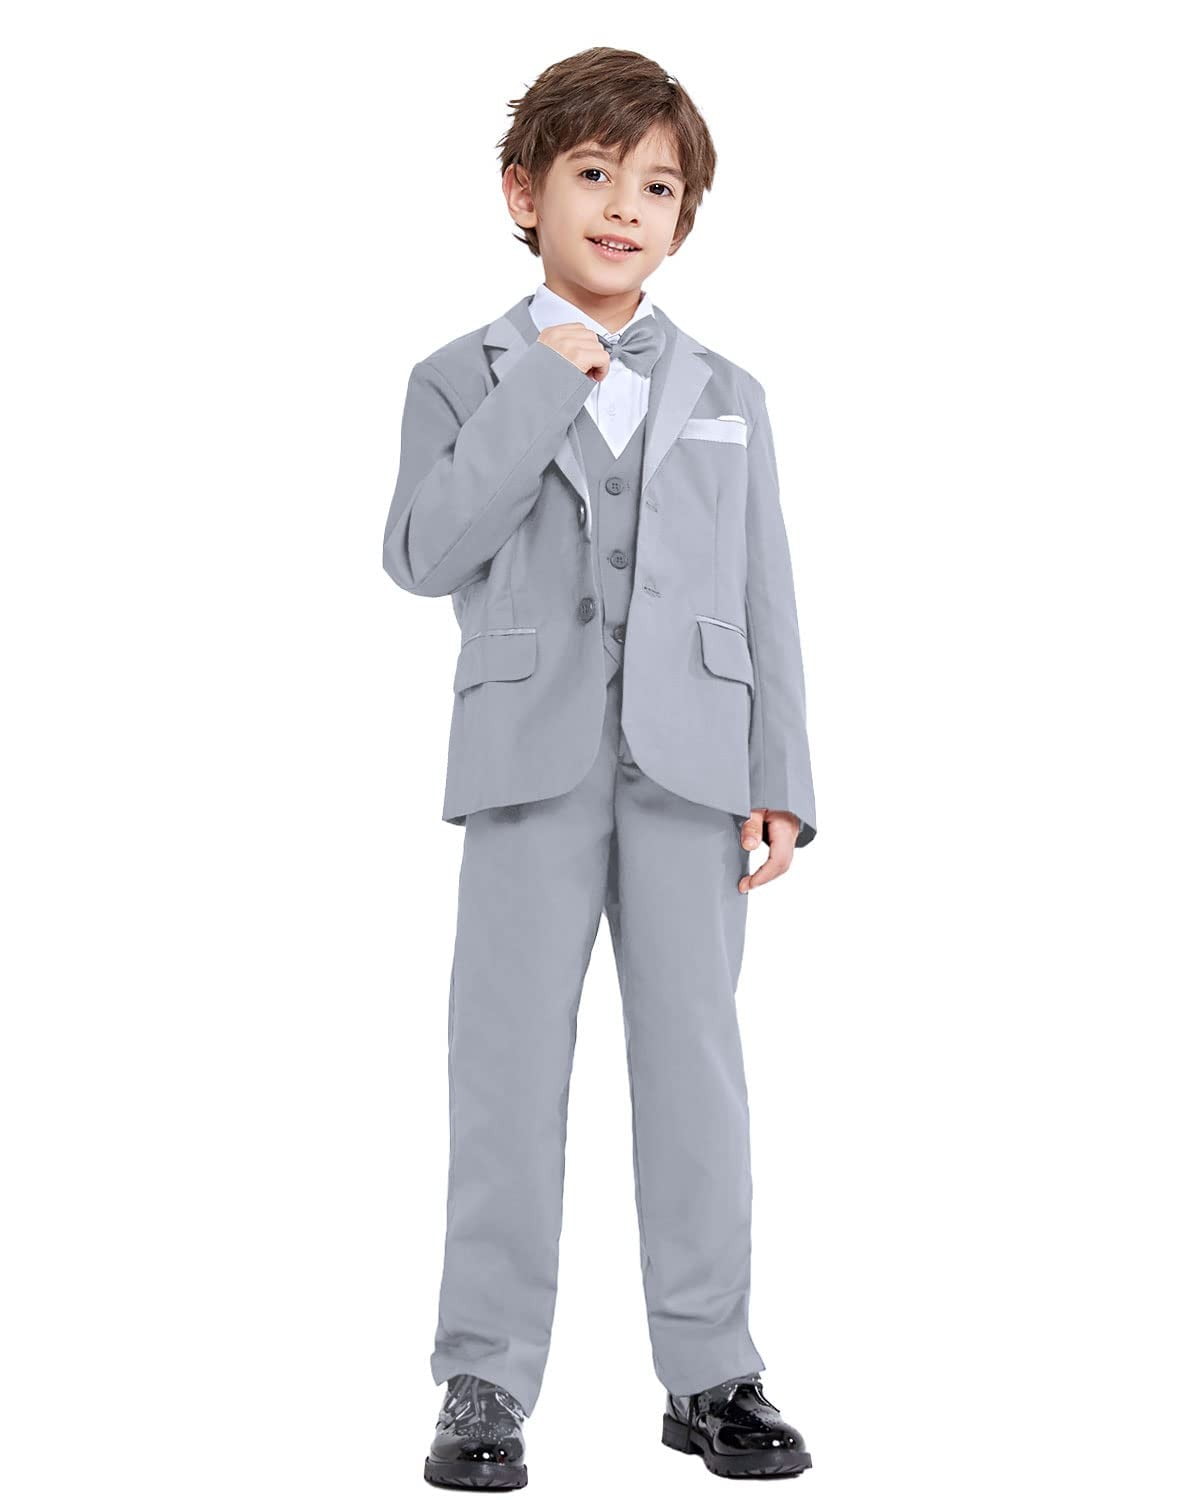 Boys Suit Boys' Suits Kids Ring Bearer Outfit Algeria | Ubuy